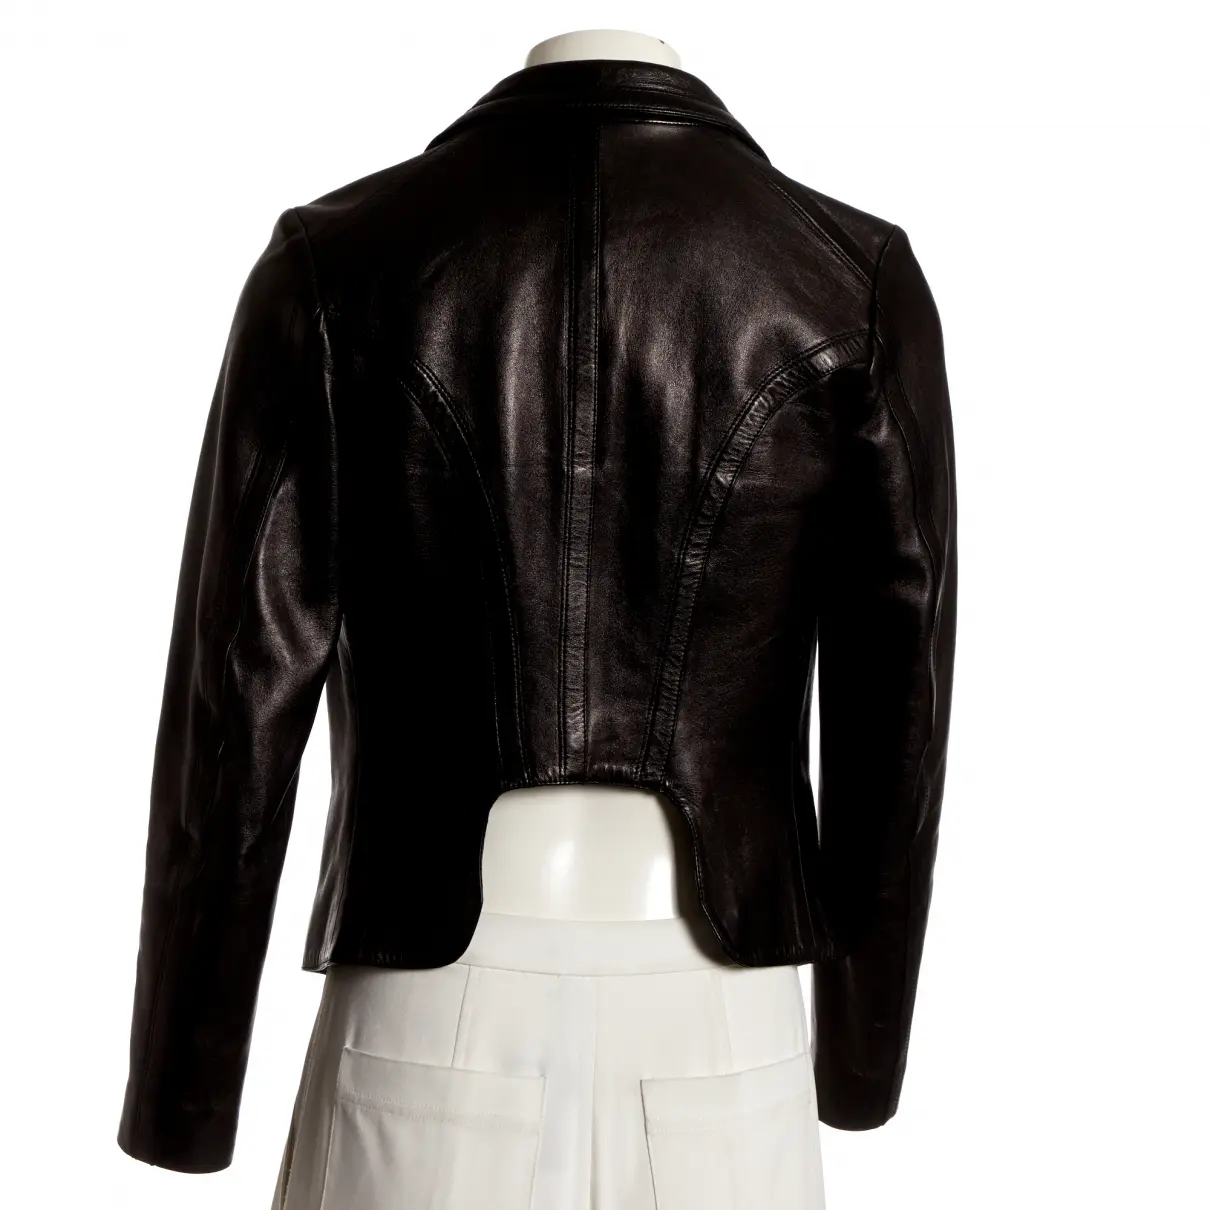 Buy Yves Saint Laurent Leather biker jacket online